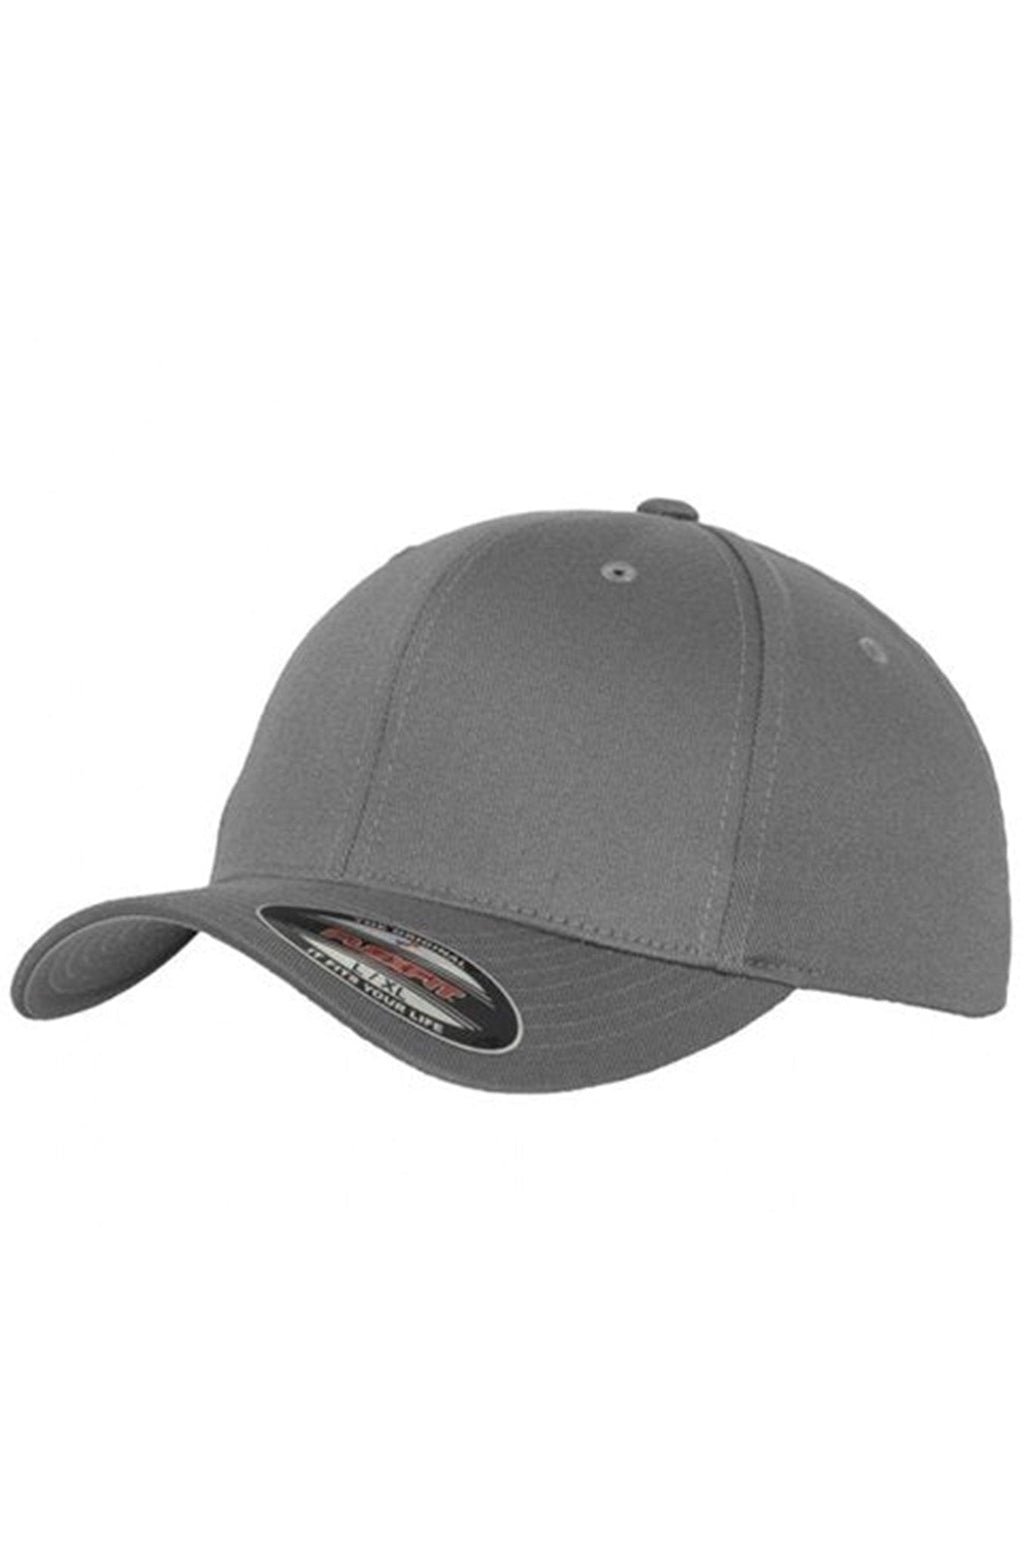 Flexfit Cap da baseball originale - grigio chiaro